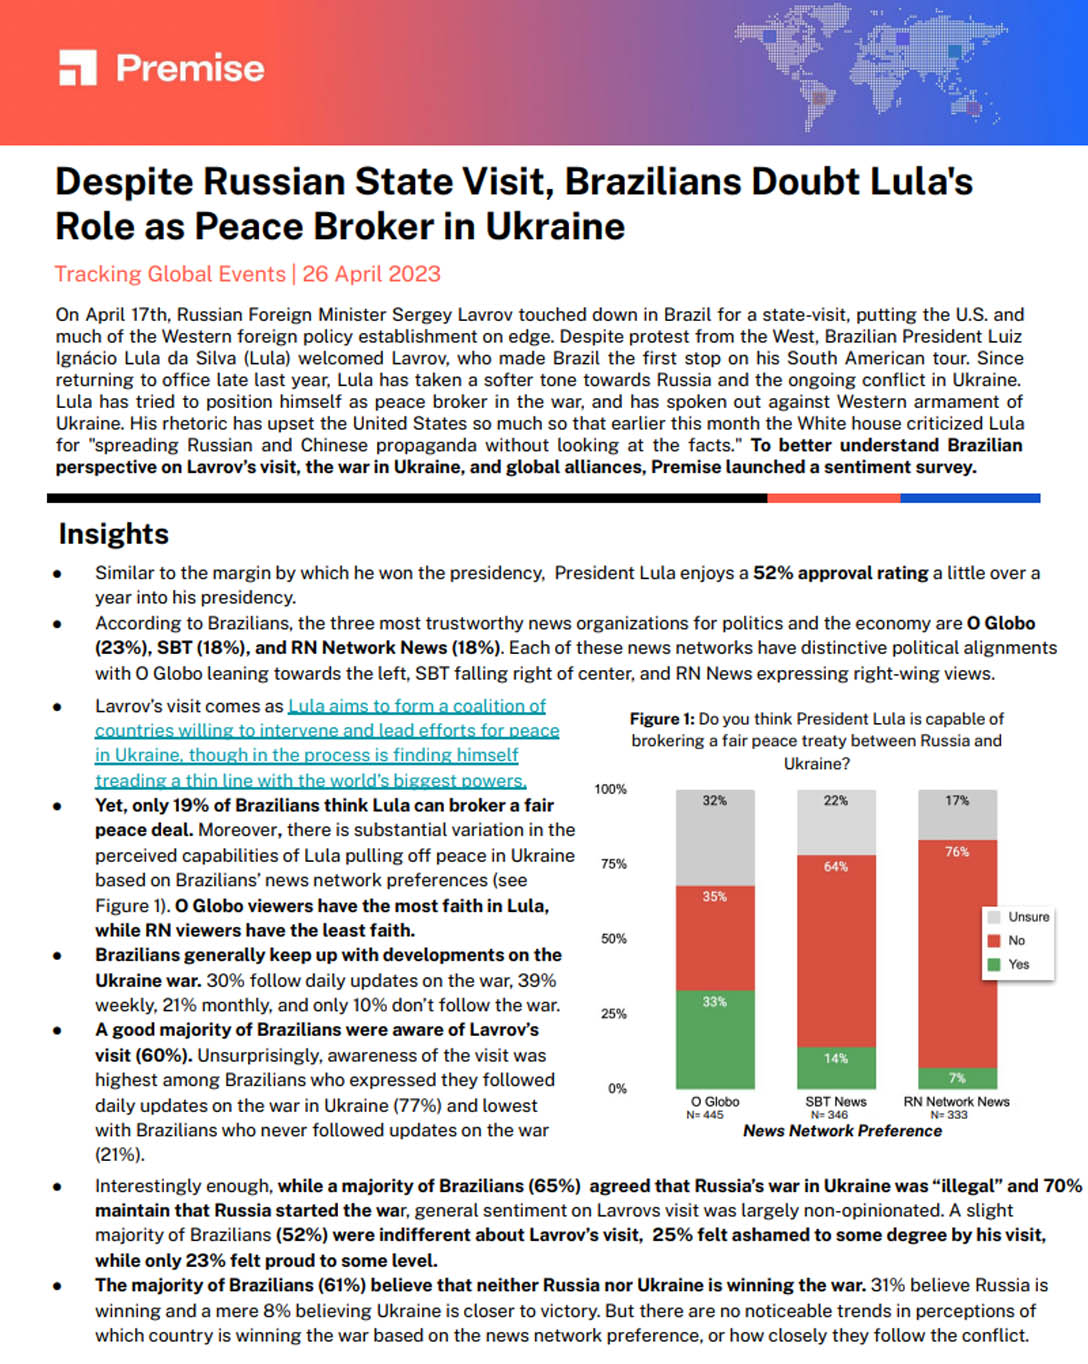 Despite Russian State Visit, Brazilians Doubt Lula’s Role as Peace Broker in Ukraine